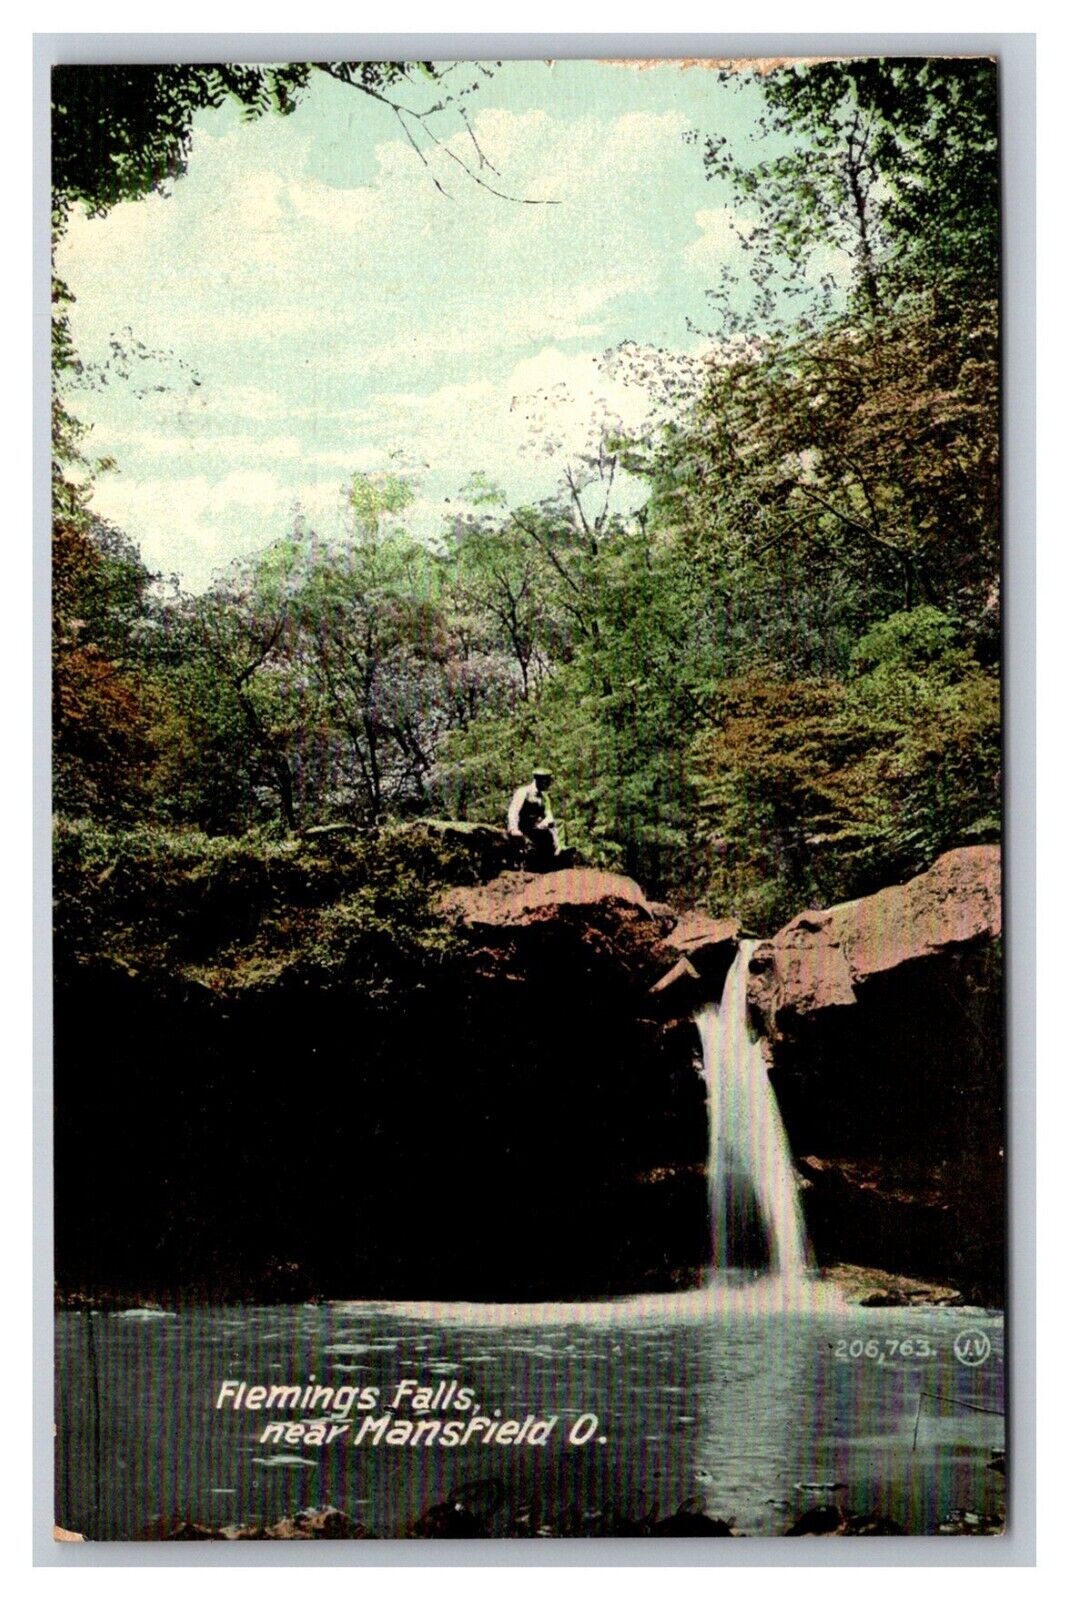 Postcard Mansfield Ohio Flemings Falls